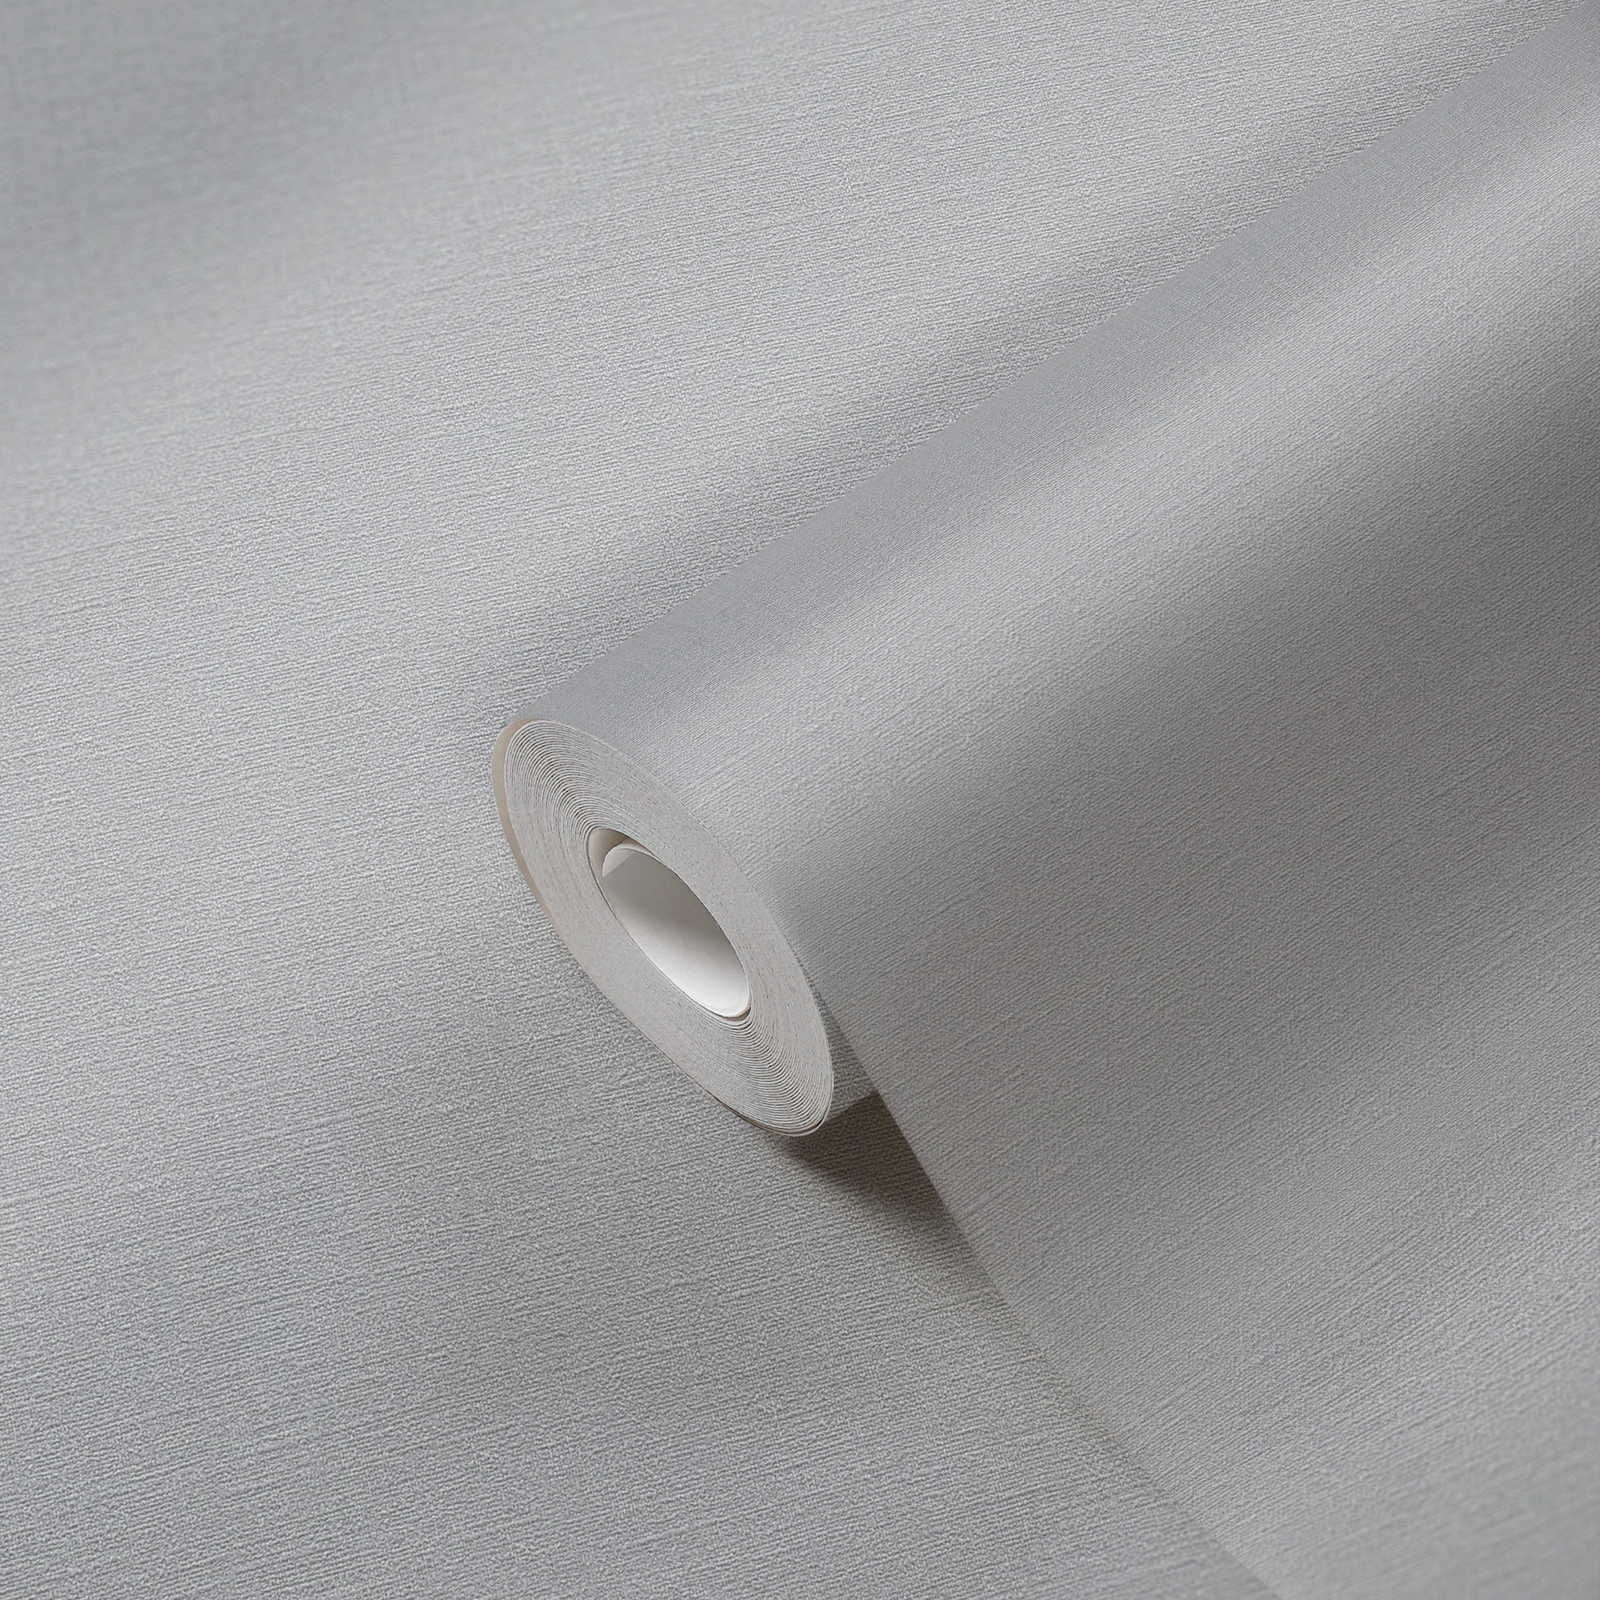             Non-woven wallpaper plain with light textile structure PVC-free - beige
        